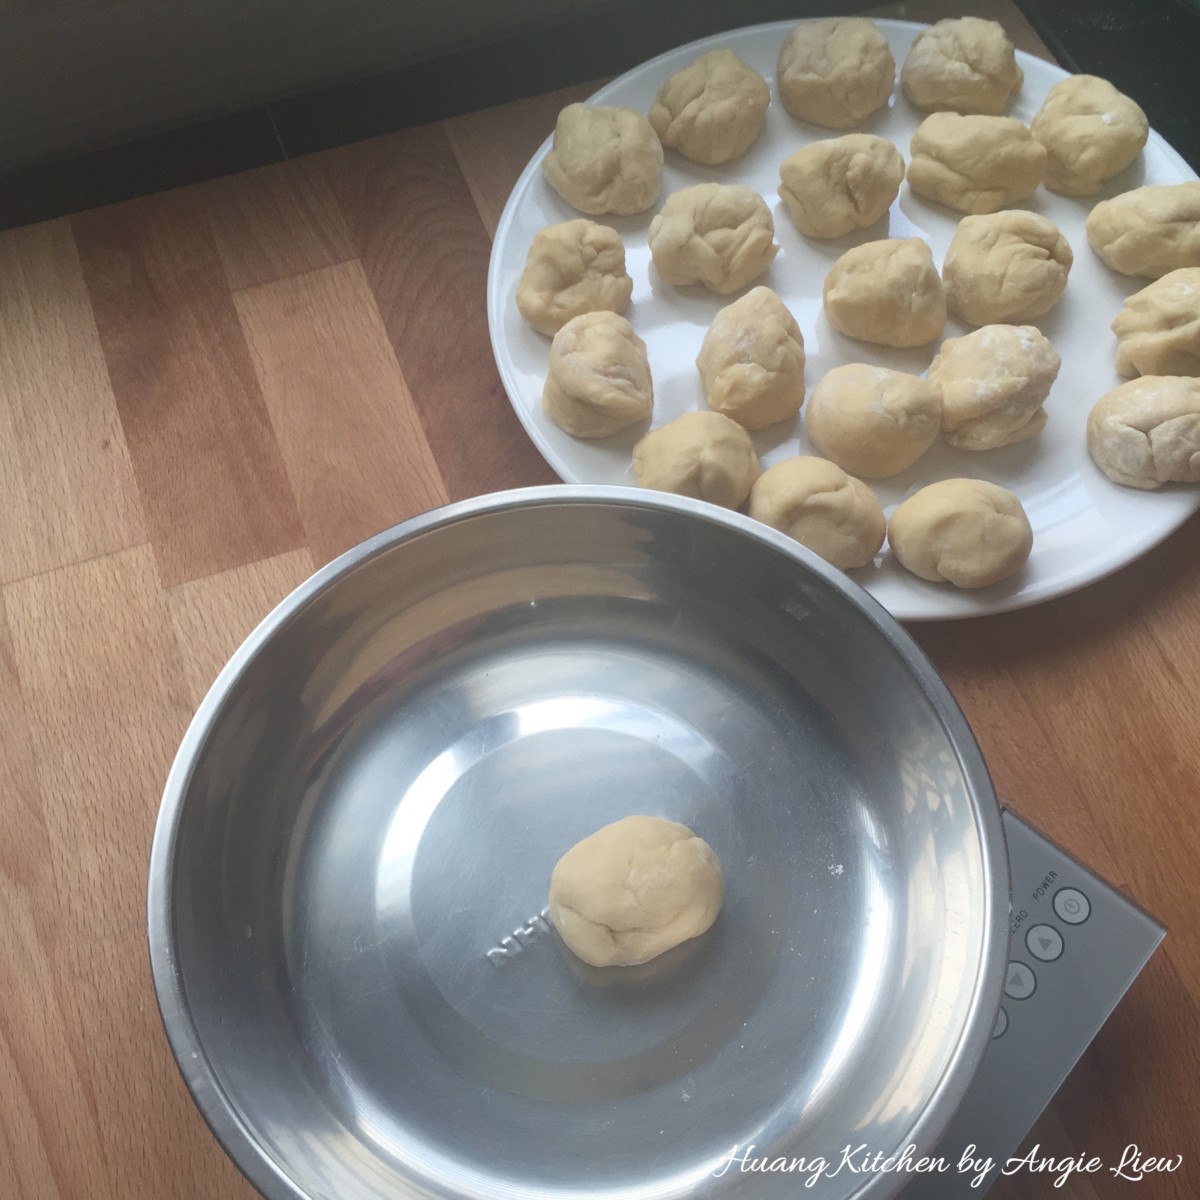 Spiral Curry Puffs recipe - divide water dough